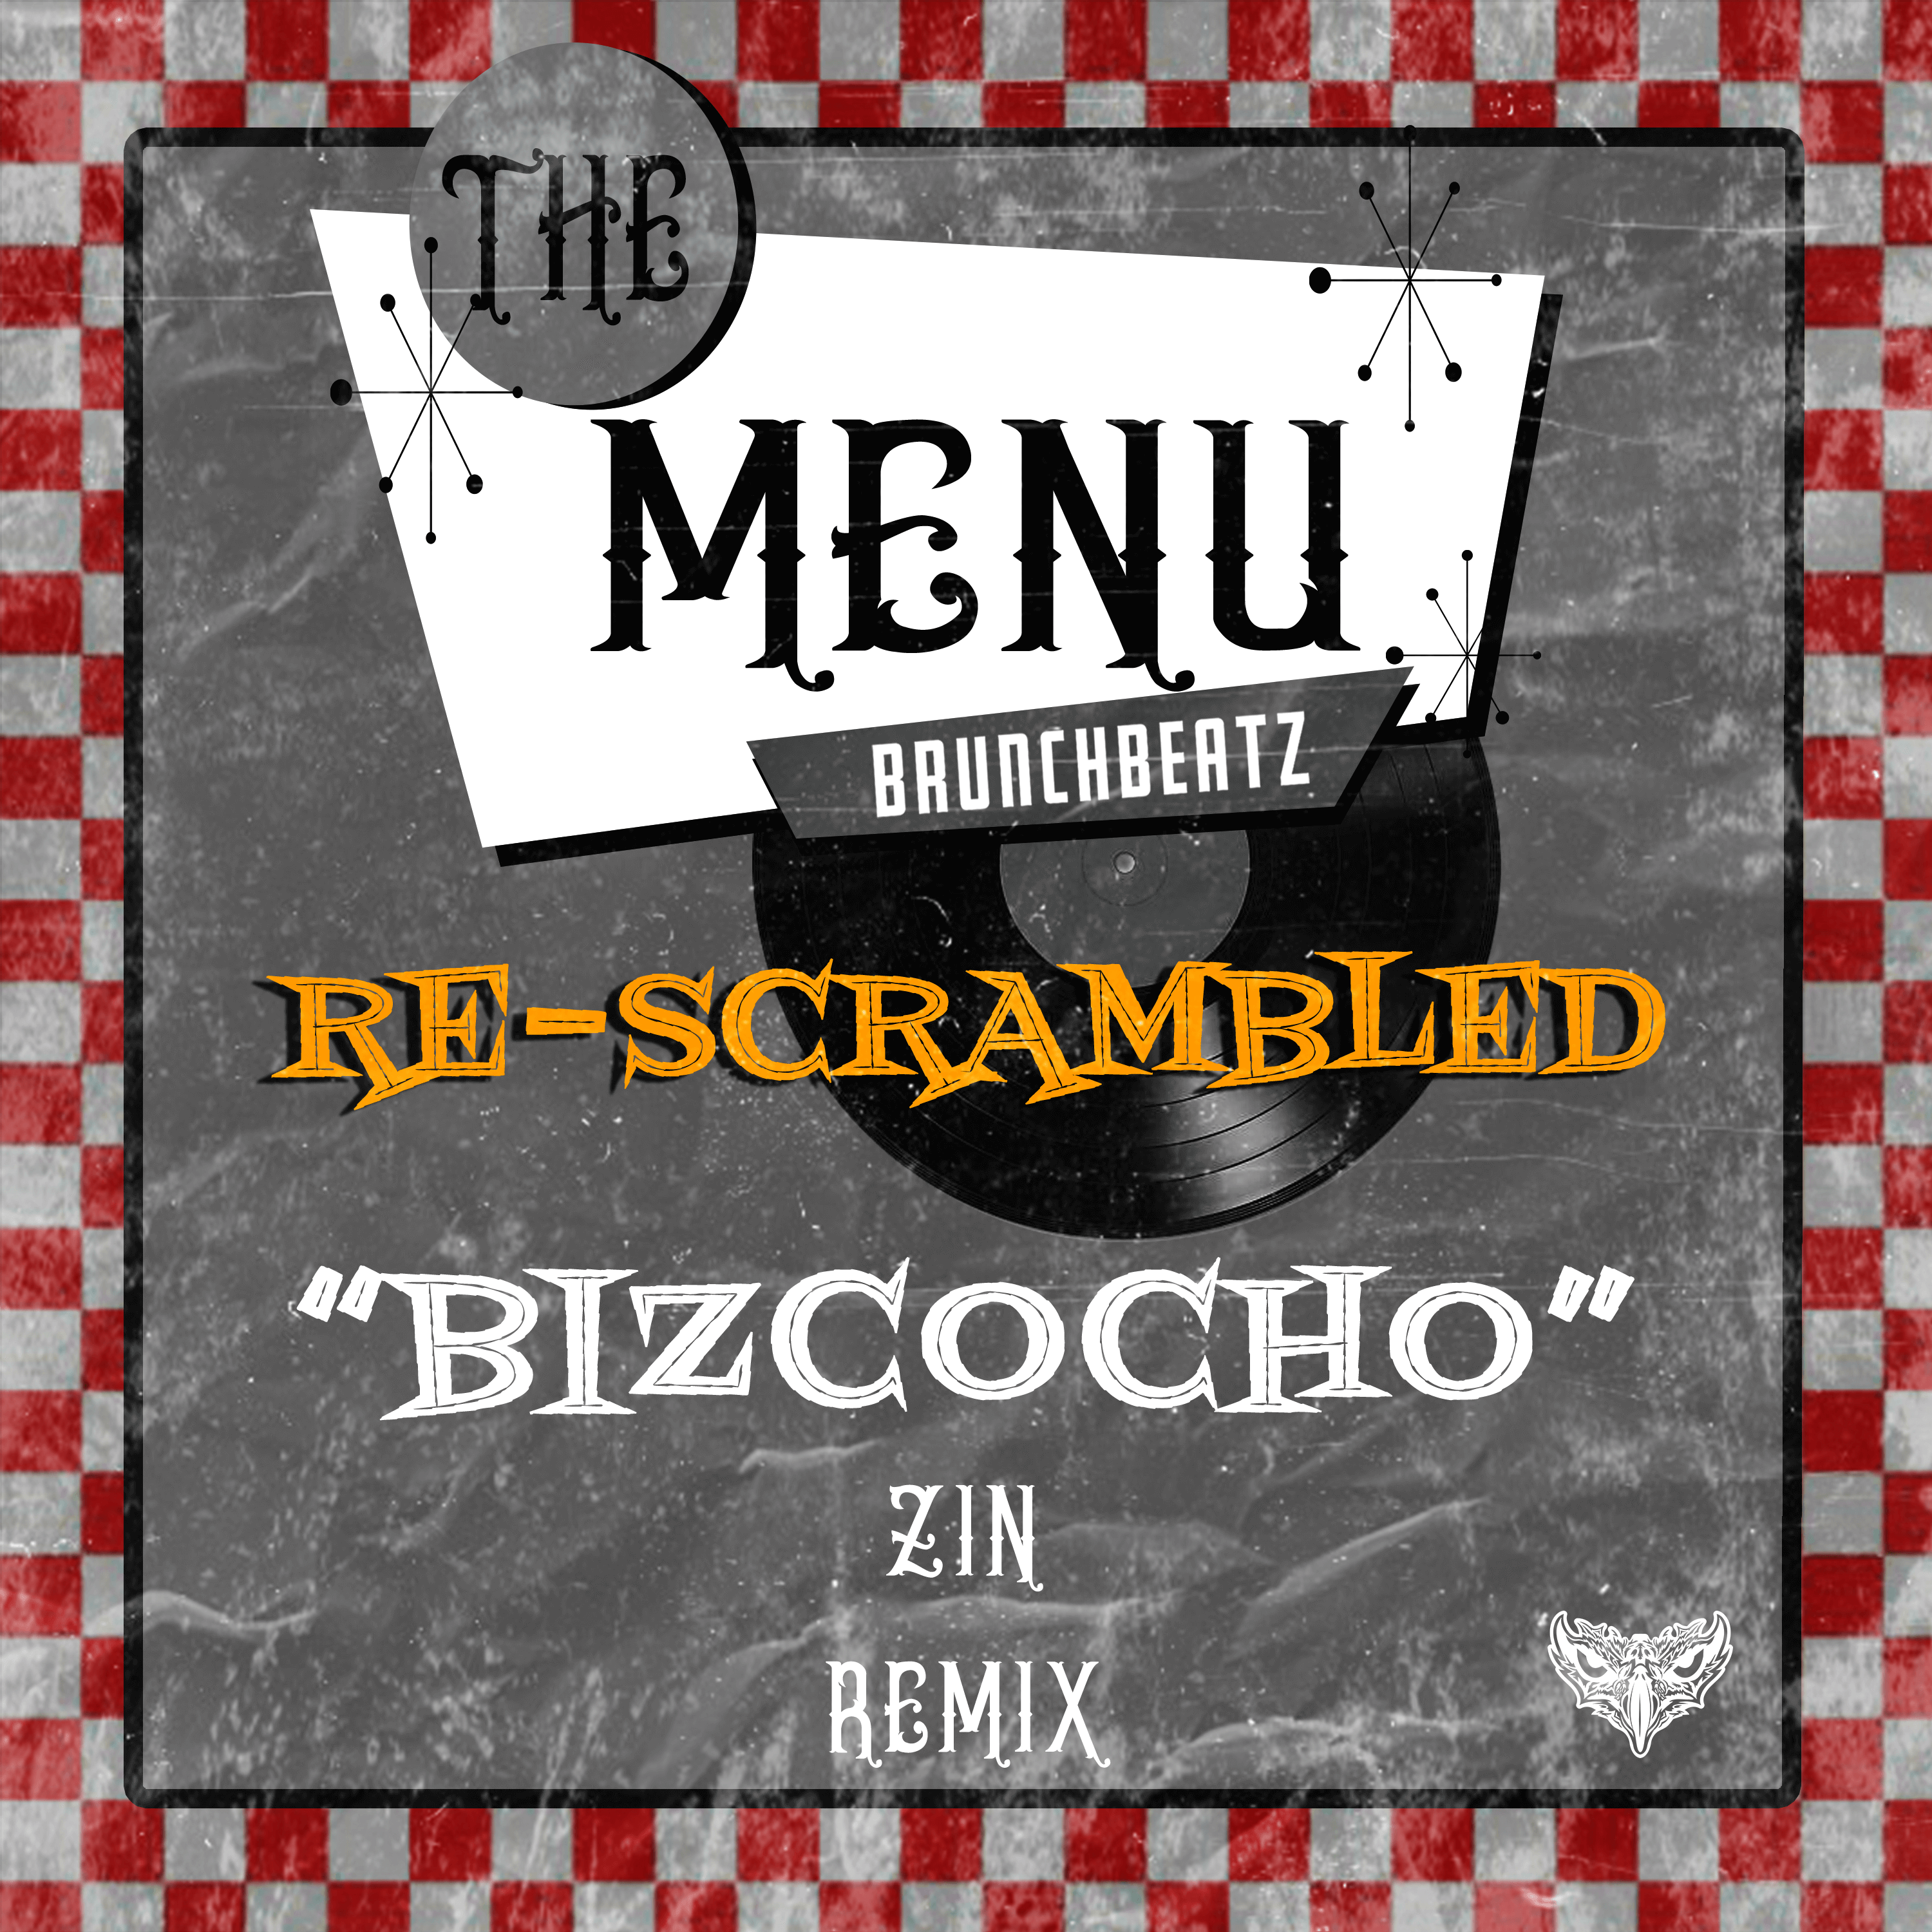 ZIN Adds Spice to BrunchBeatz’s ‘Bizcocho’